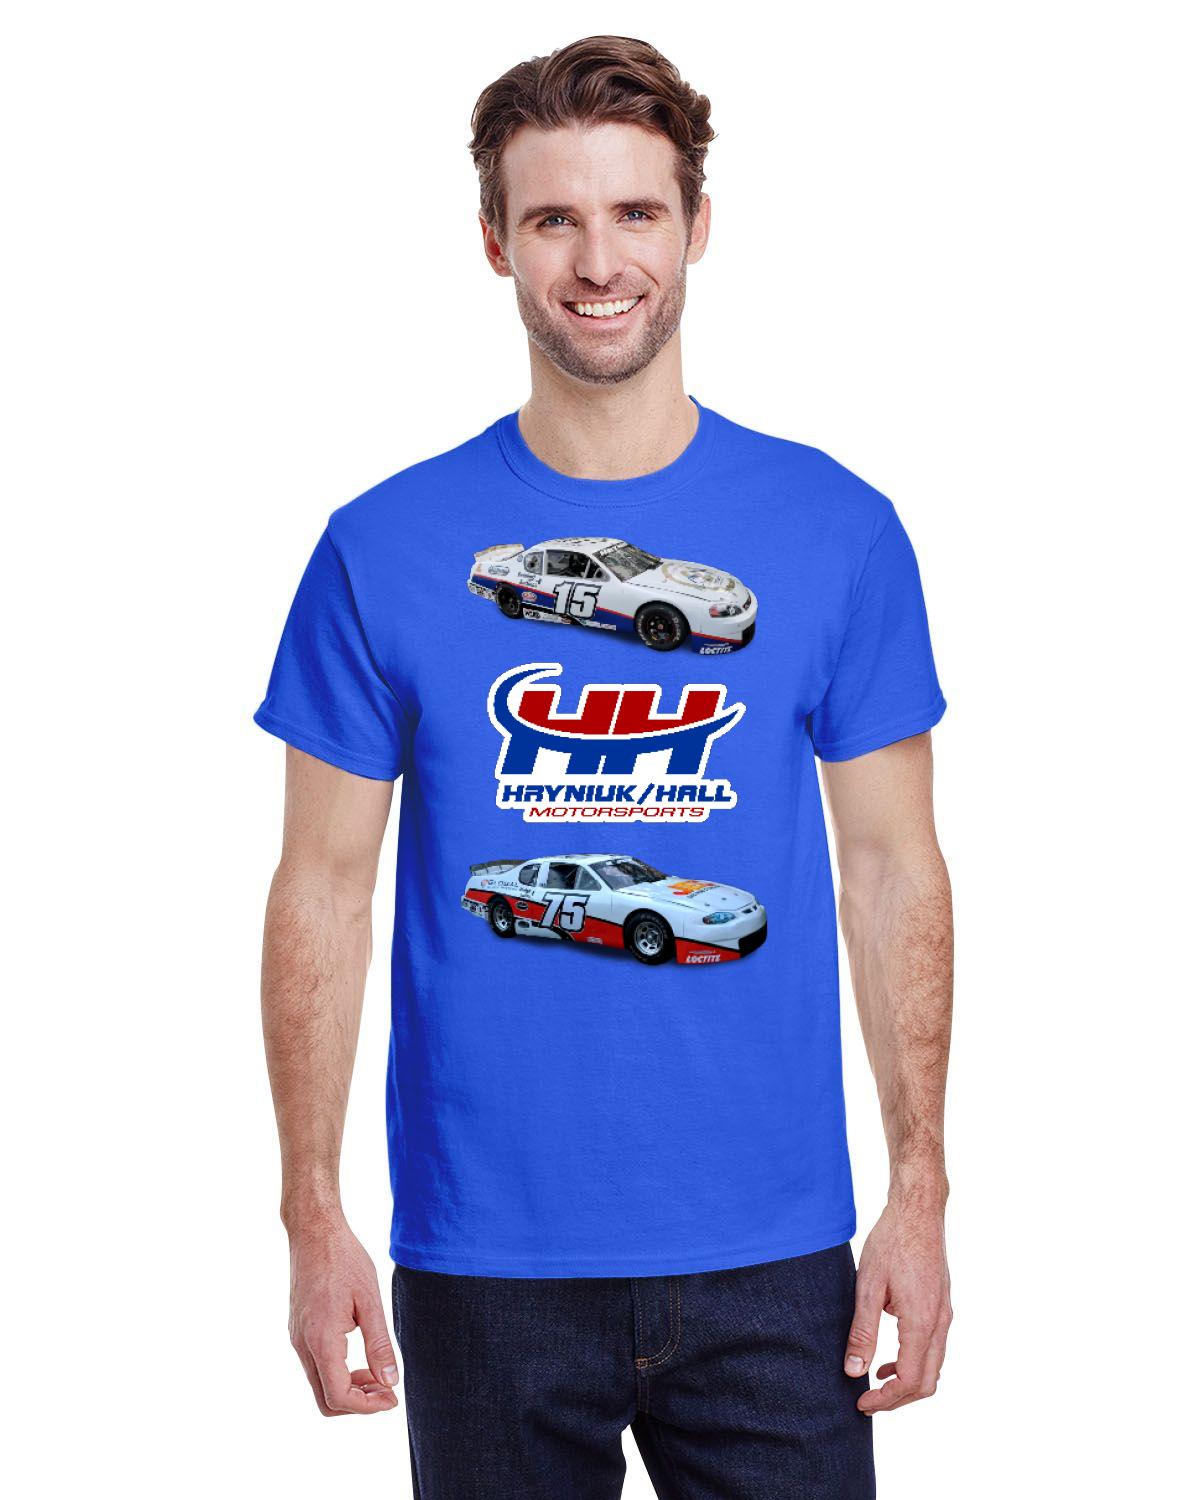 Hryniuk / Hall Motorsports Men's Tshirt